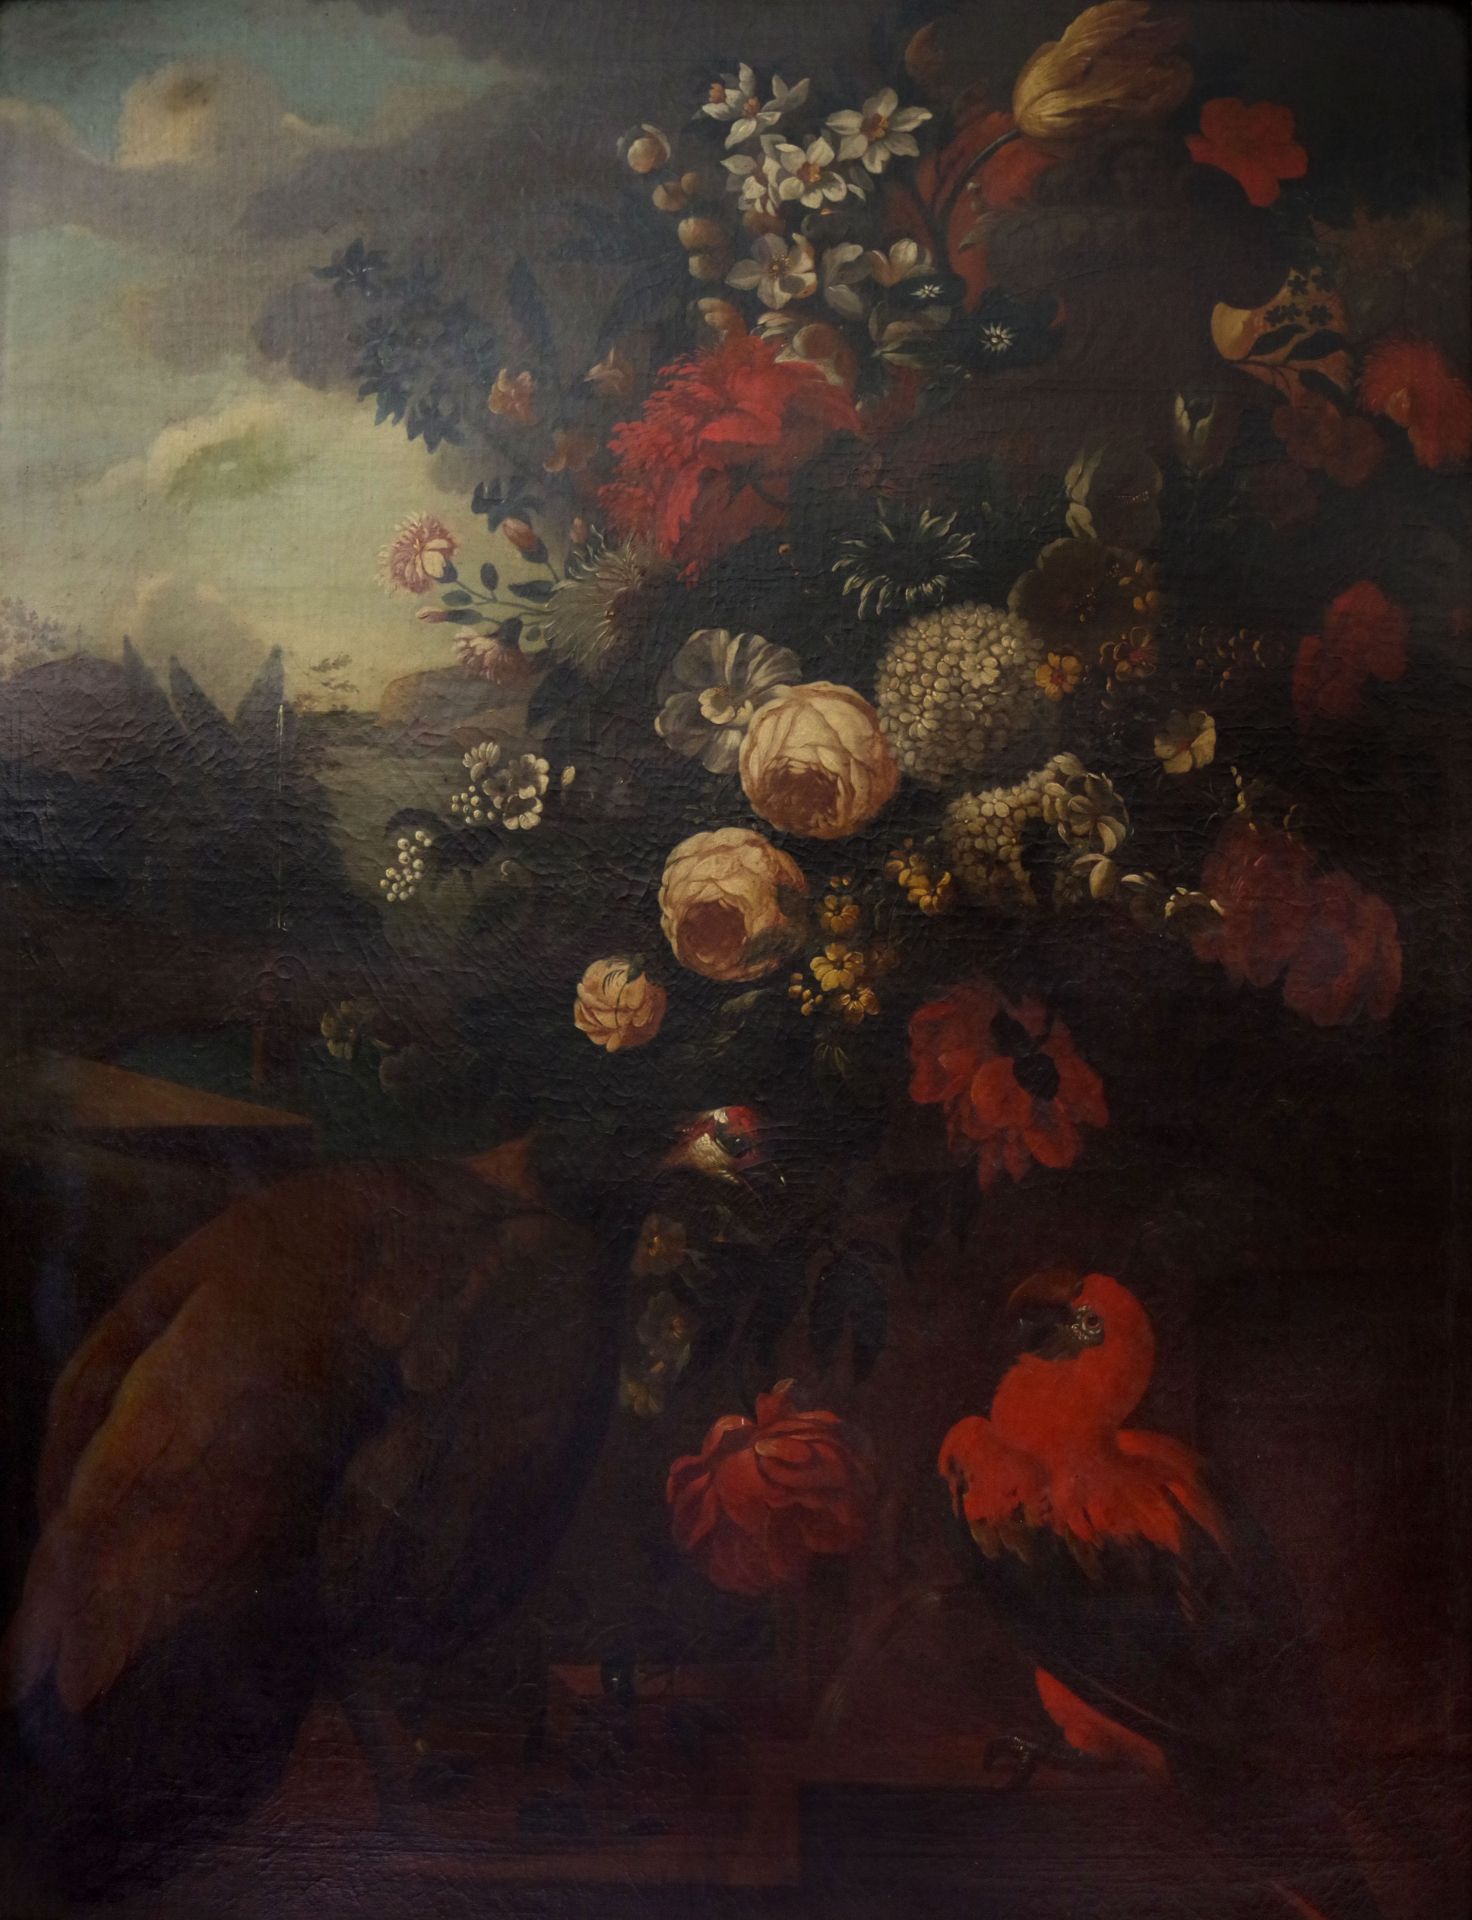 Flower still life with with birds, Jan Davidsz de Heem (successor) - Image 3 of 6